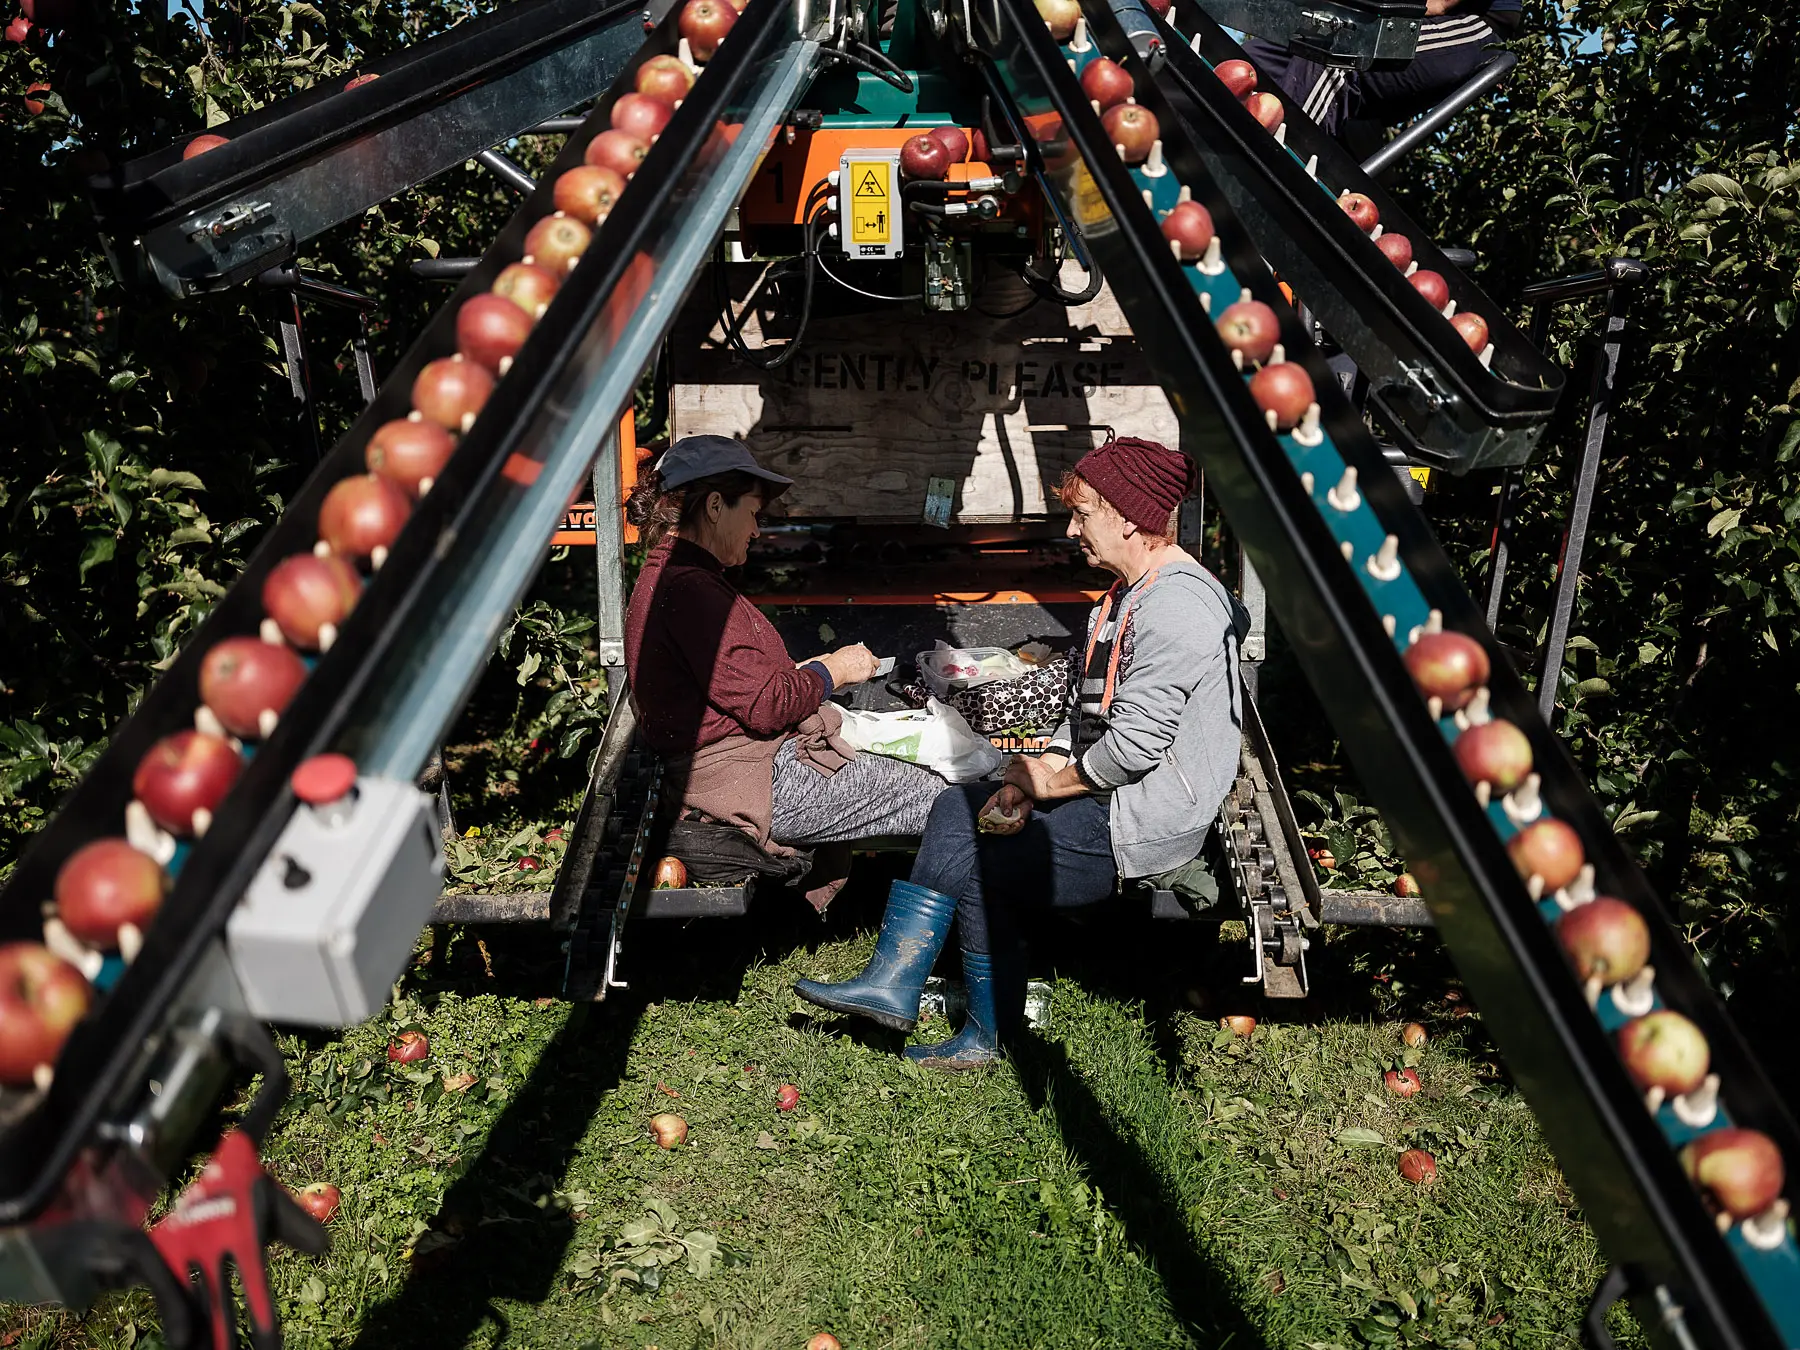 Niculina Miri, 57, and Angela Morenciu, 54, seasonal workers, have lunch on the apple picking platform.